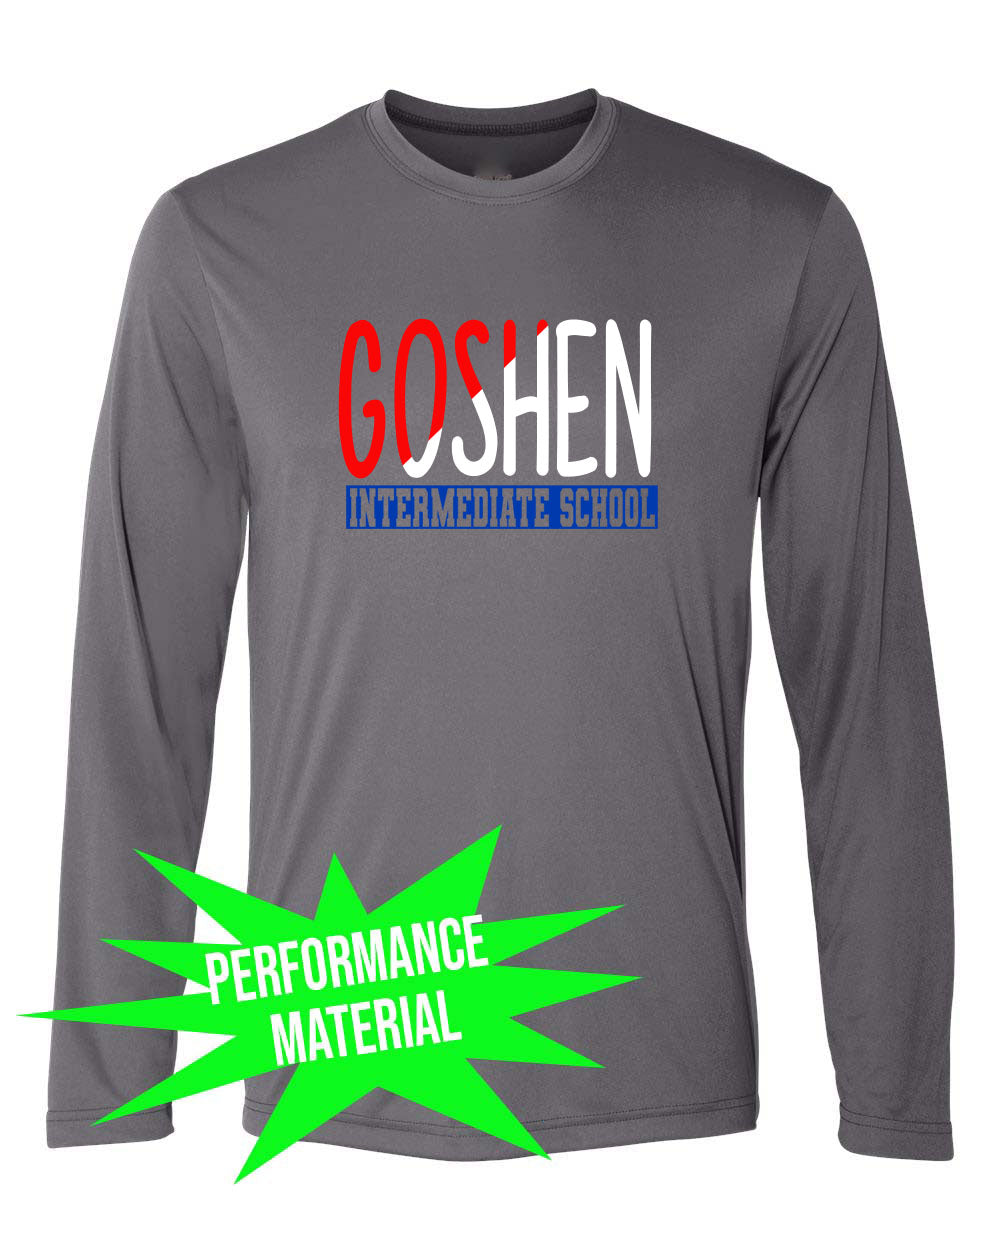 Goshen School Performance Material Design 3 Long Sleeve Shirt